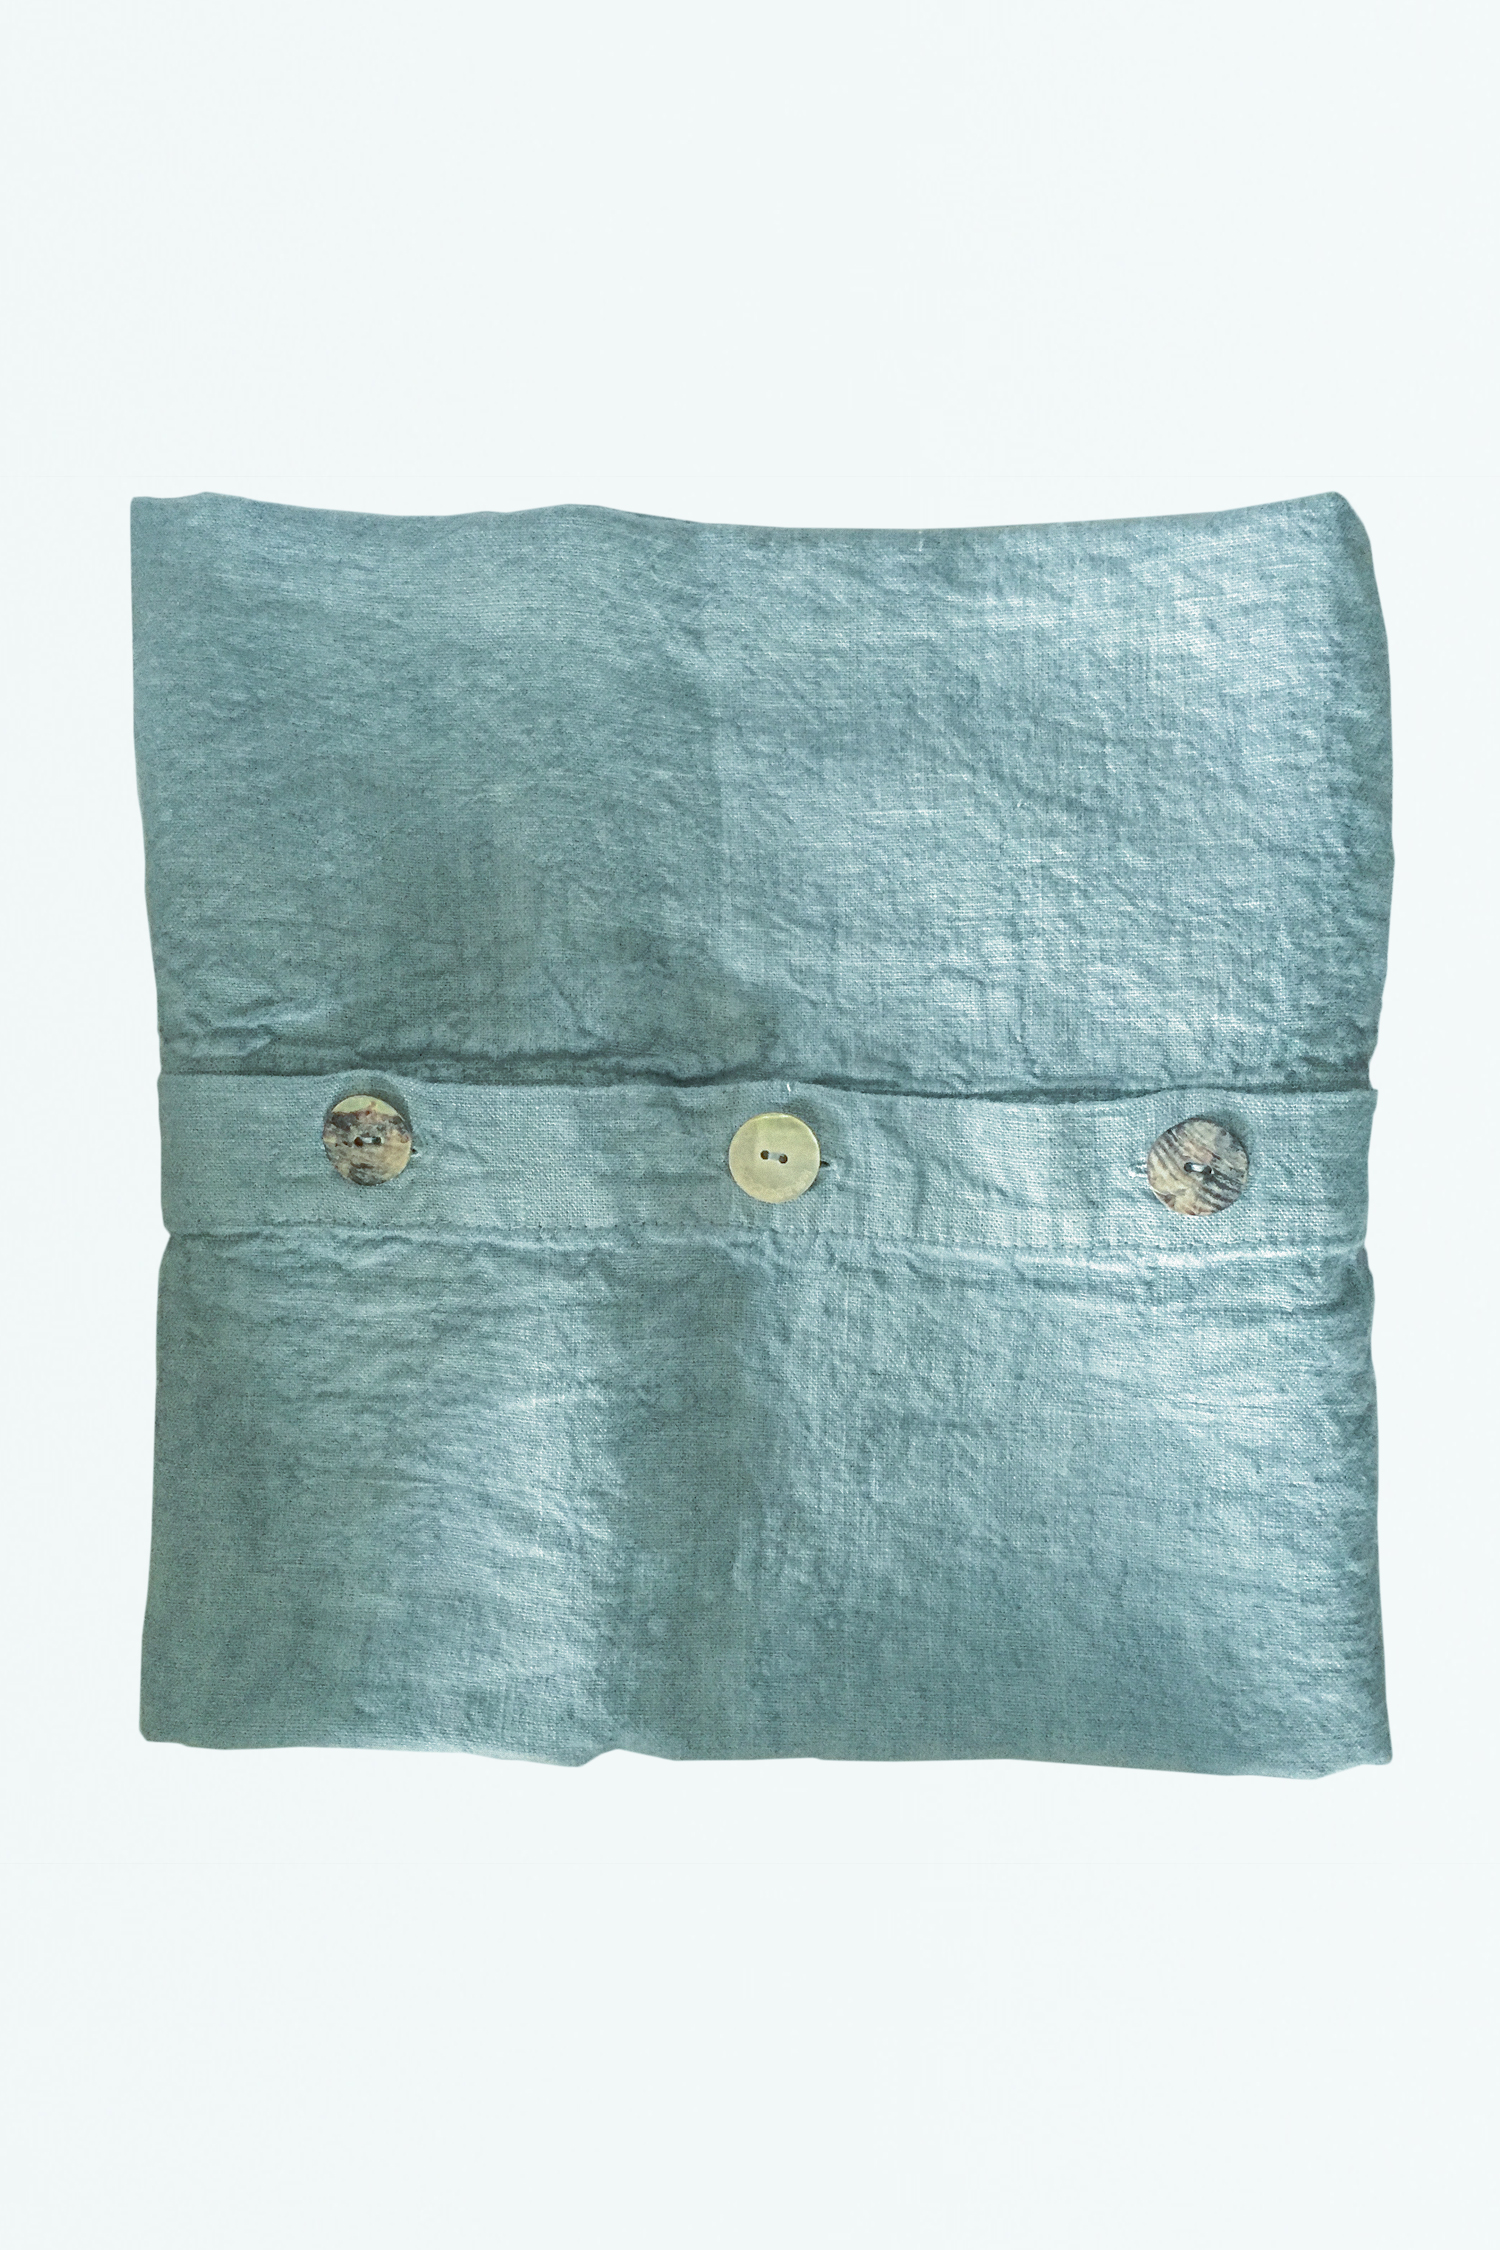 Washed Linen Pistachio Blue Cushion Cover